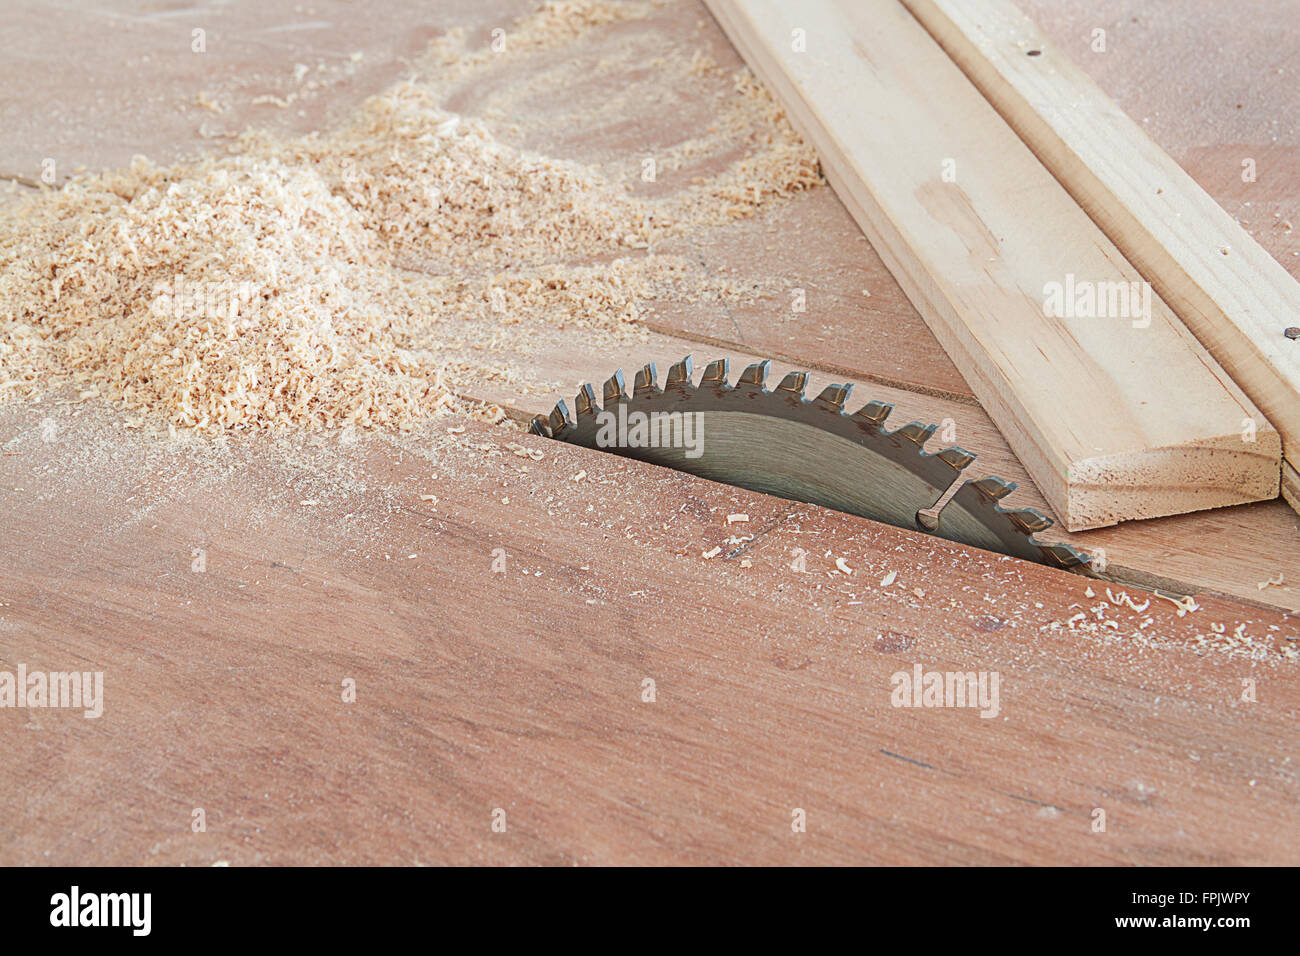 Circular saw cutting wooden plank Stock Photo